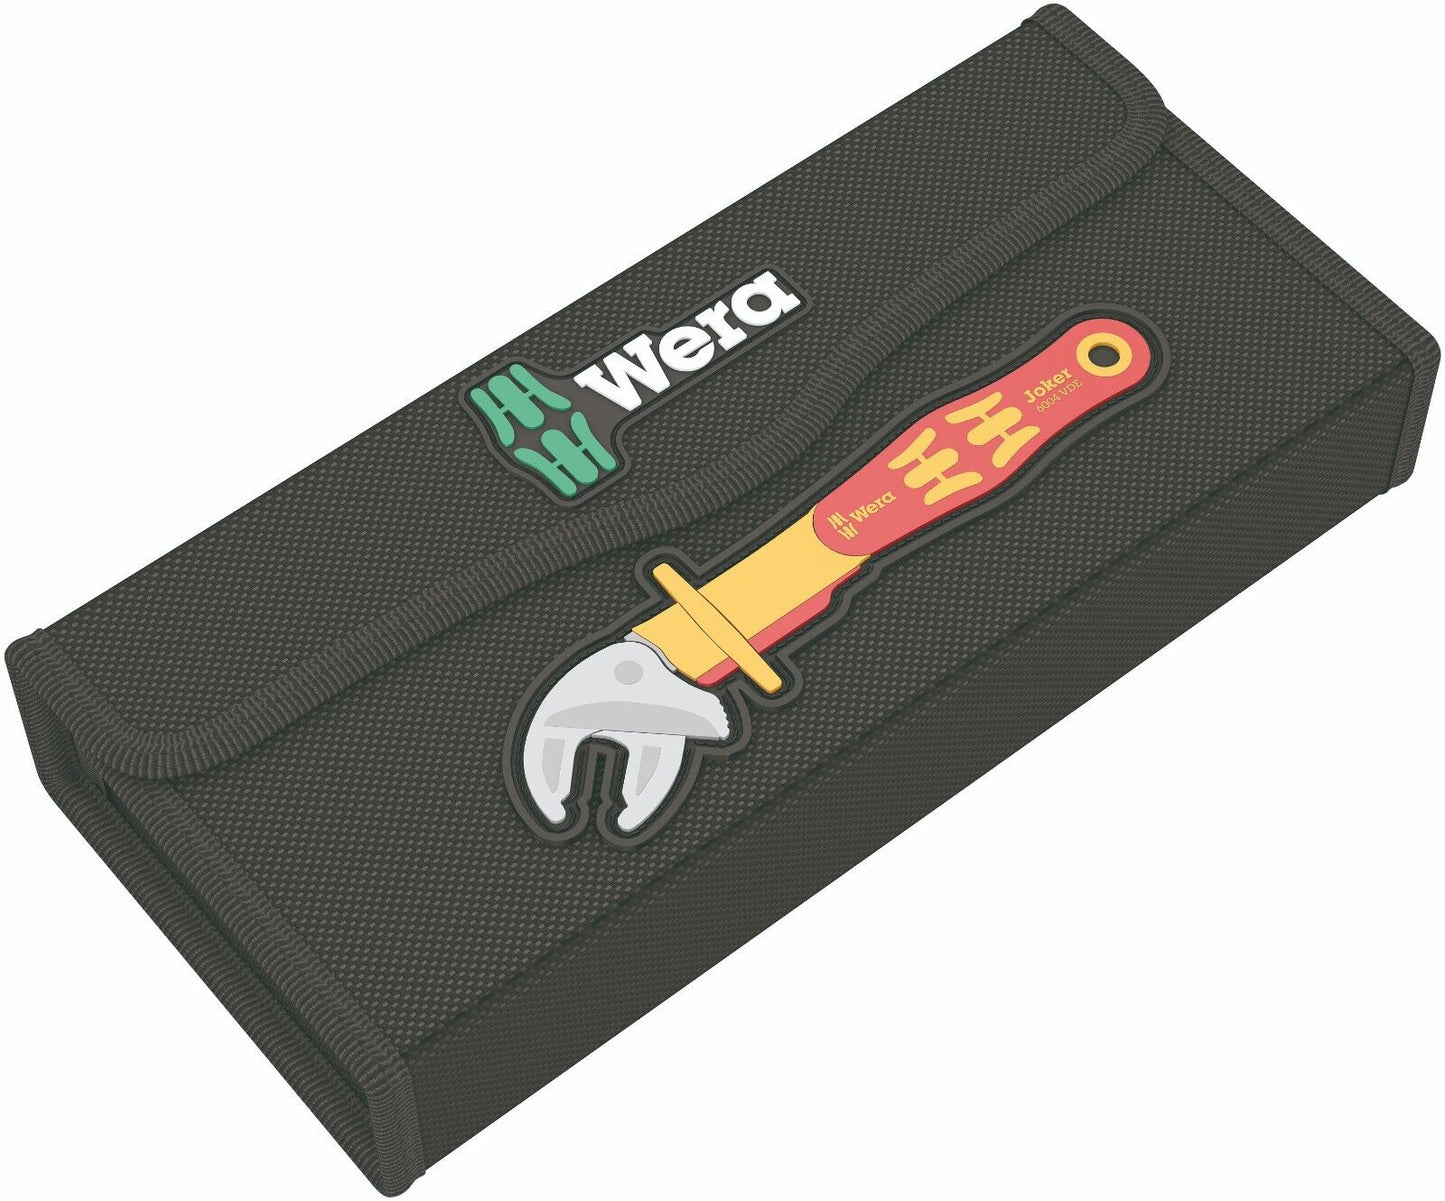 Wera 6004 Joker VDE Insulated Self Setting Spanner Wrench Set 05020170001